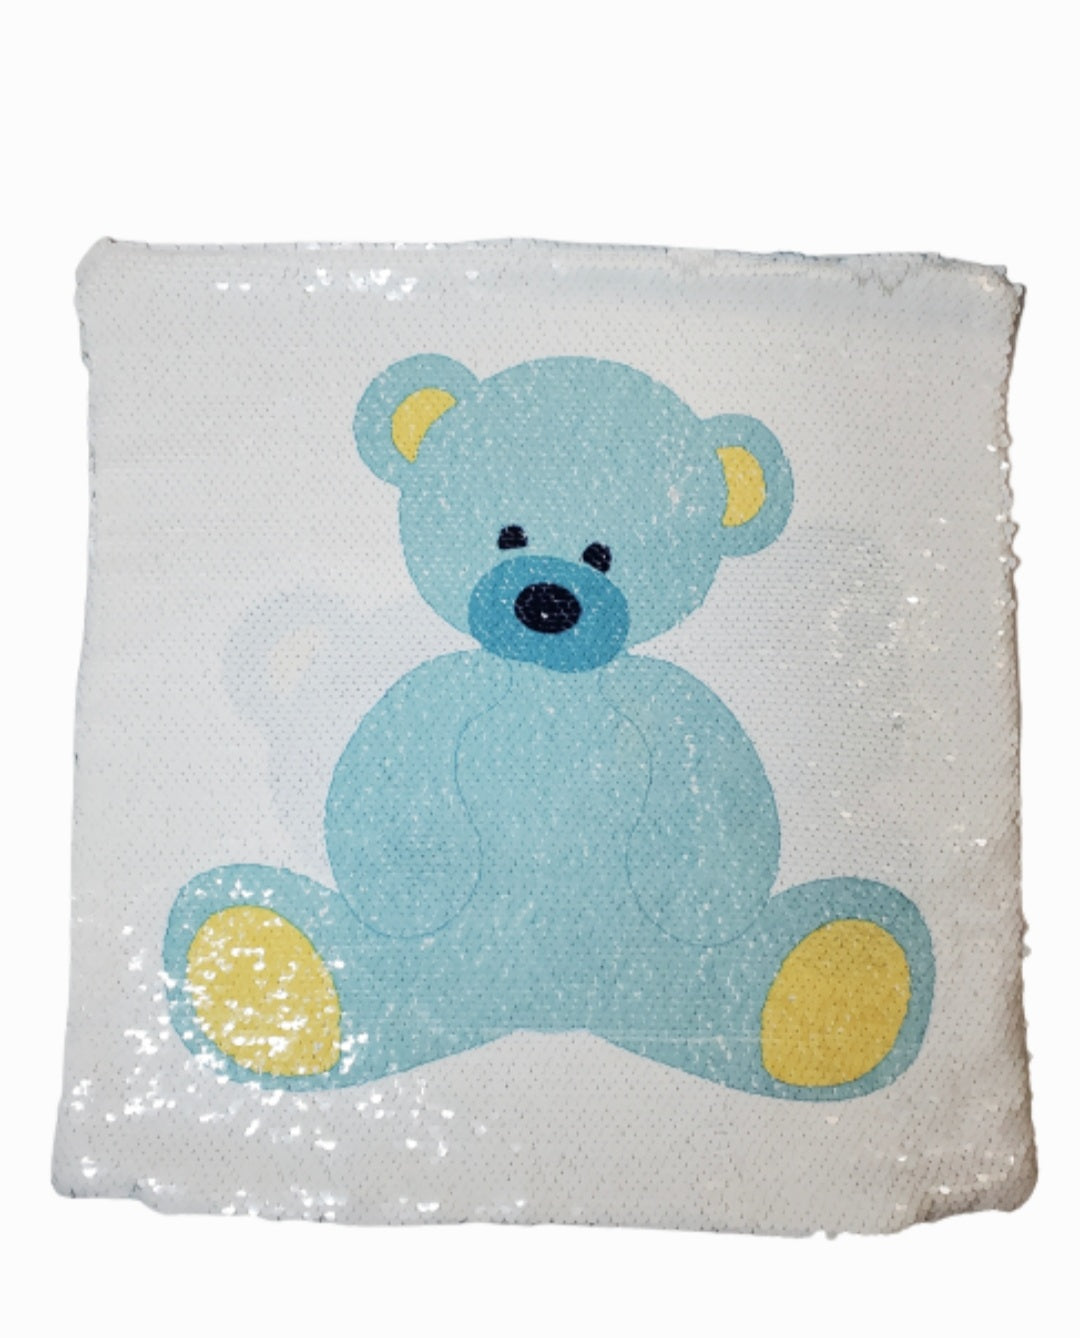 Kid's Corner - Custom Decorative Sequin Pillows